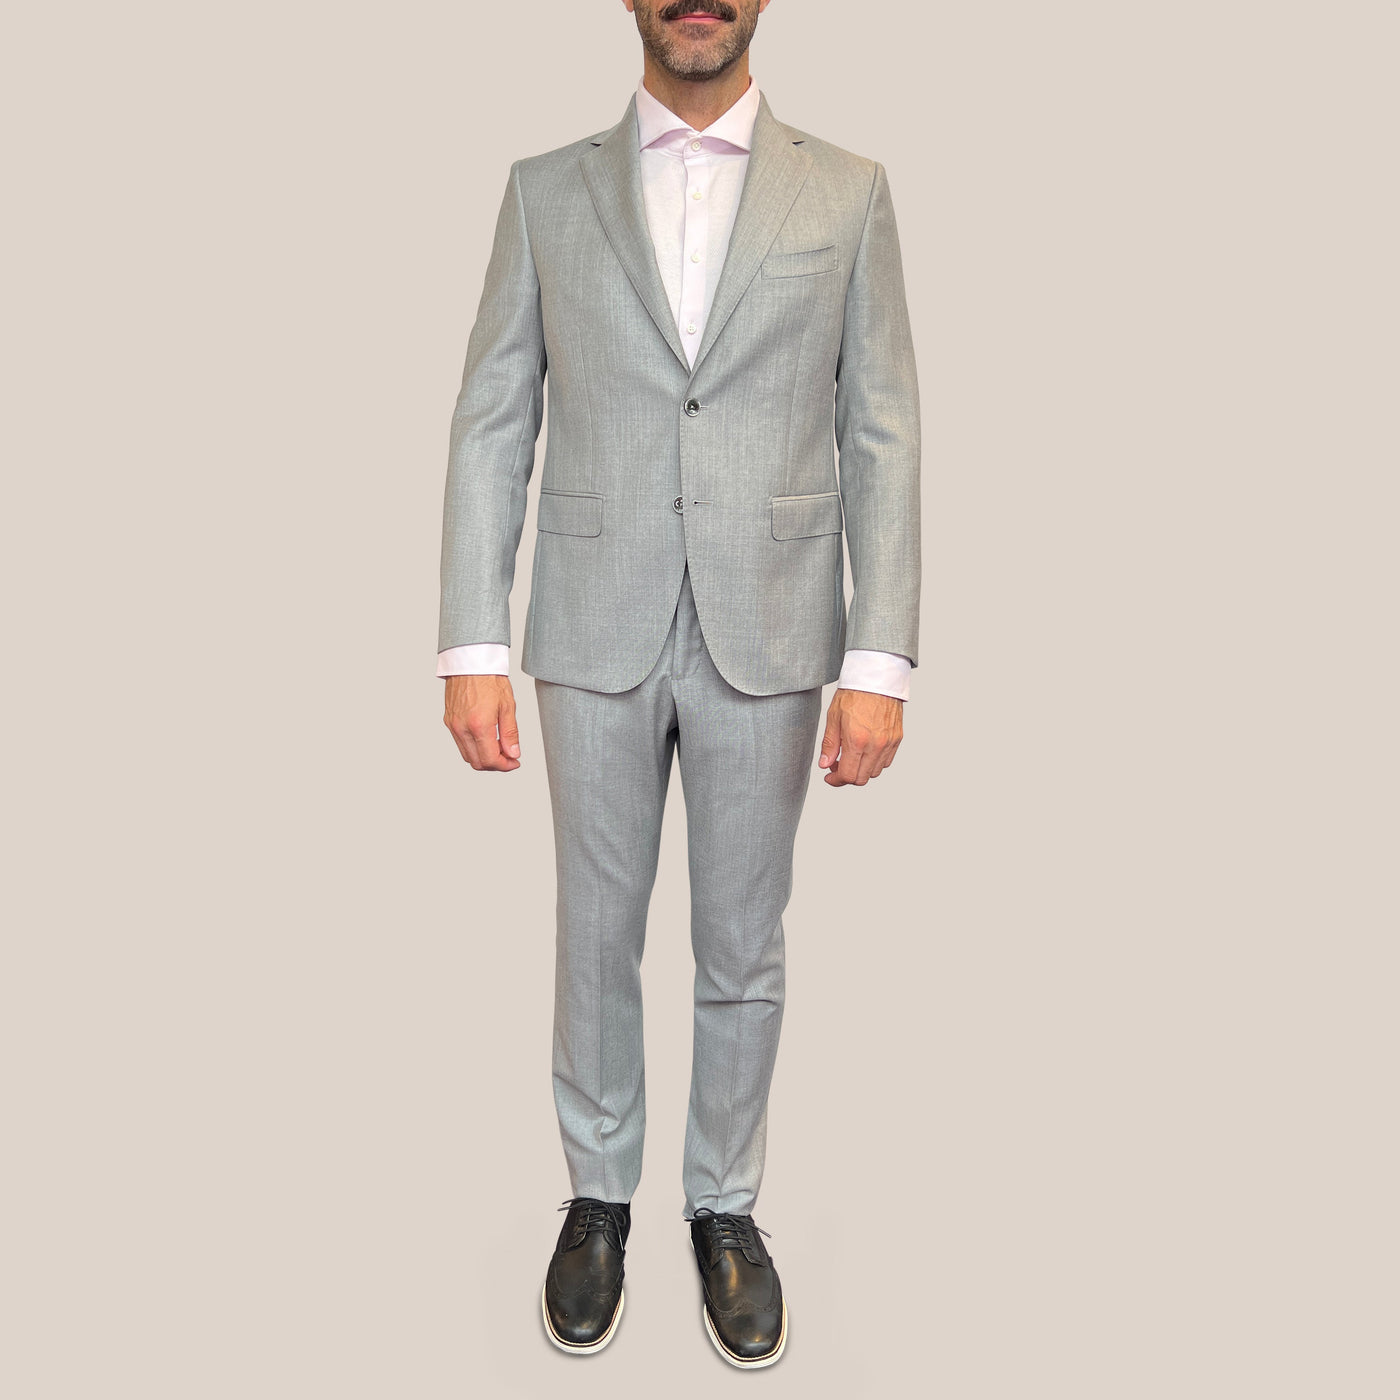 Gotstyle Fashion - Calvaresi Suits Melange Wool Blazer - Grey